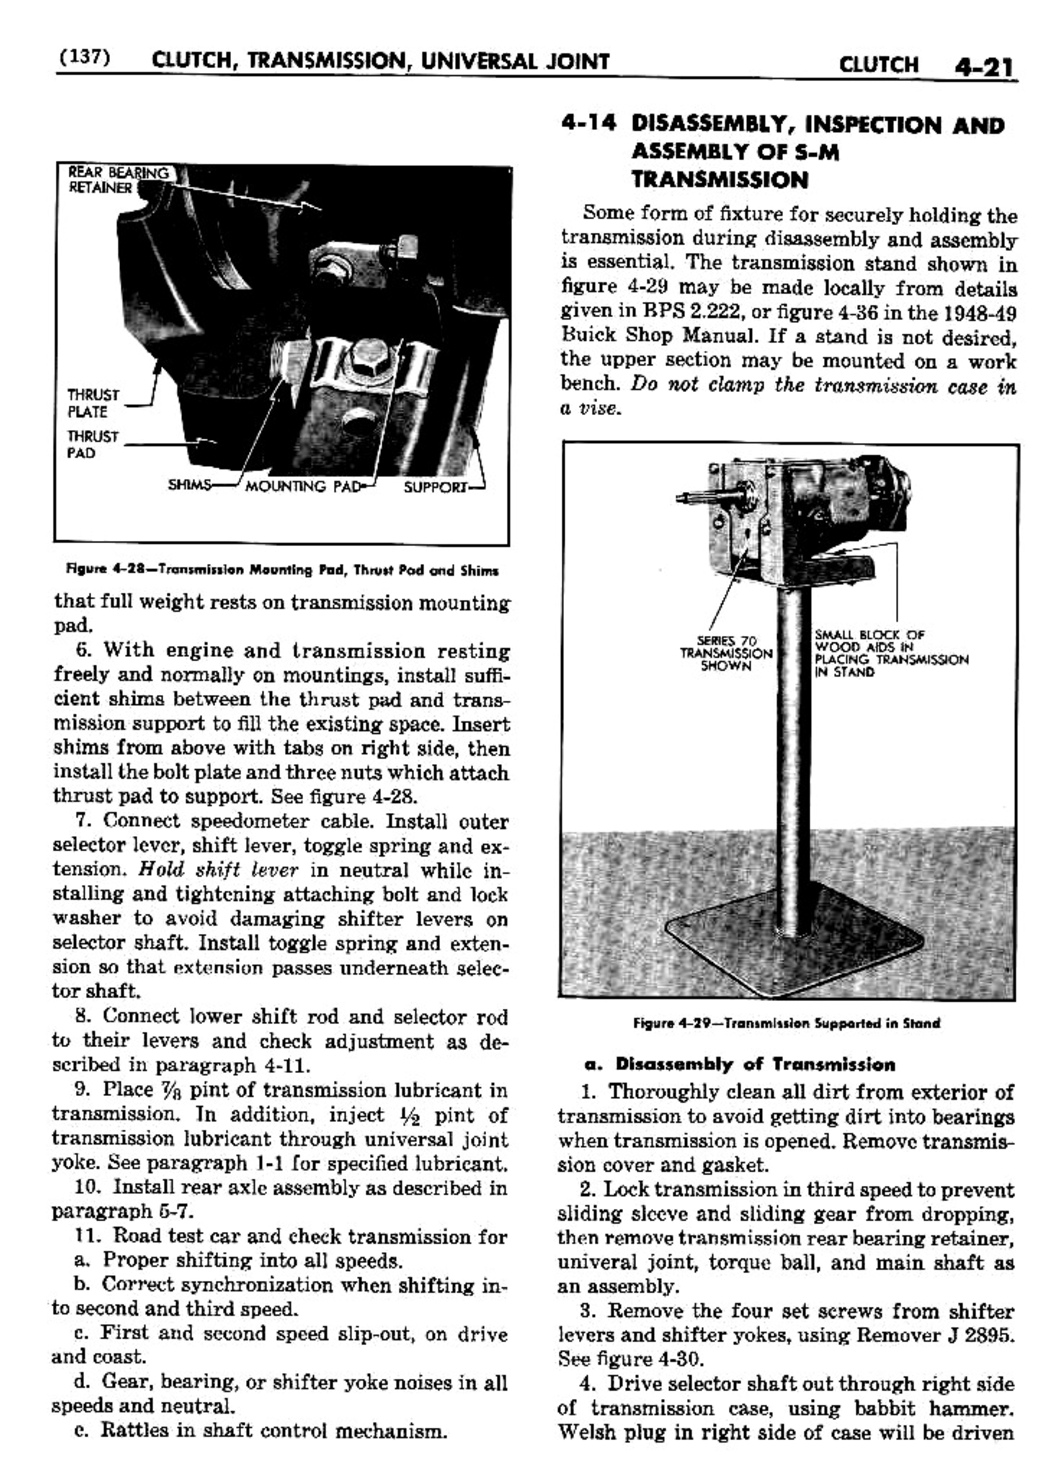 n_05 1950 Buick Shop Manual - Transmission-021-021.jpg